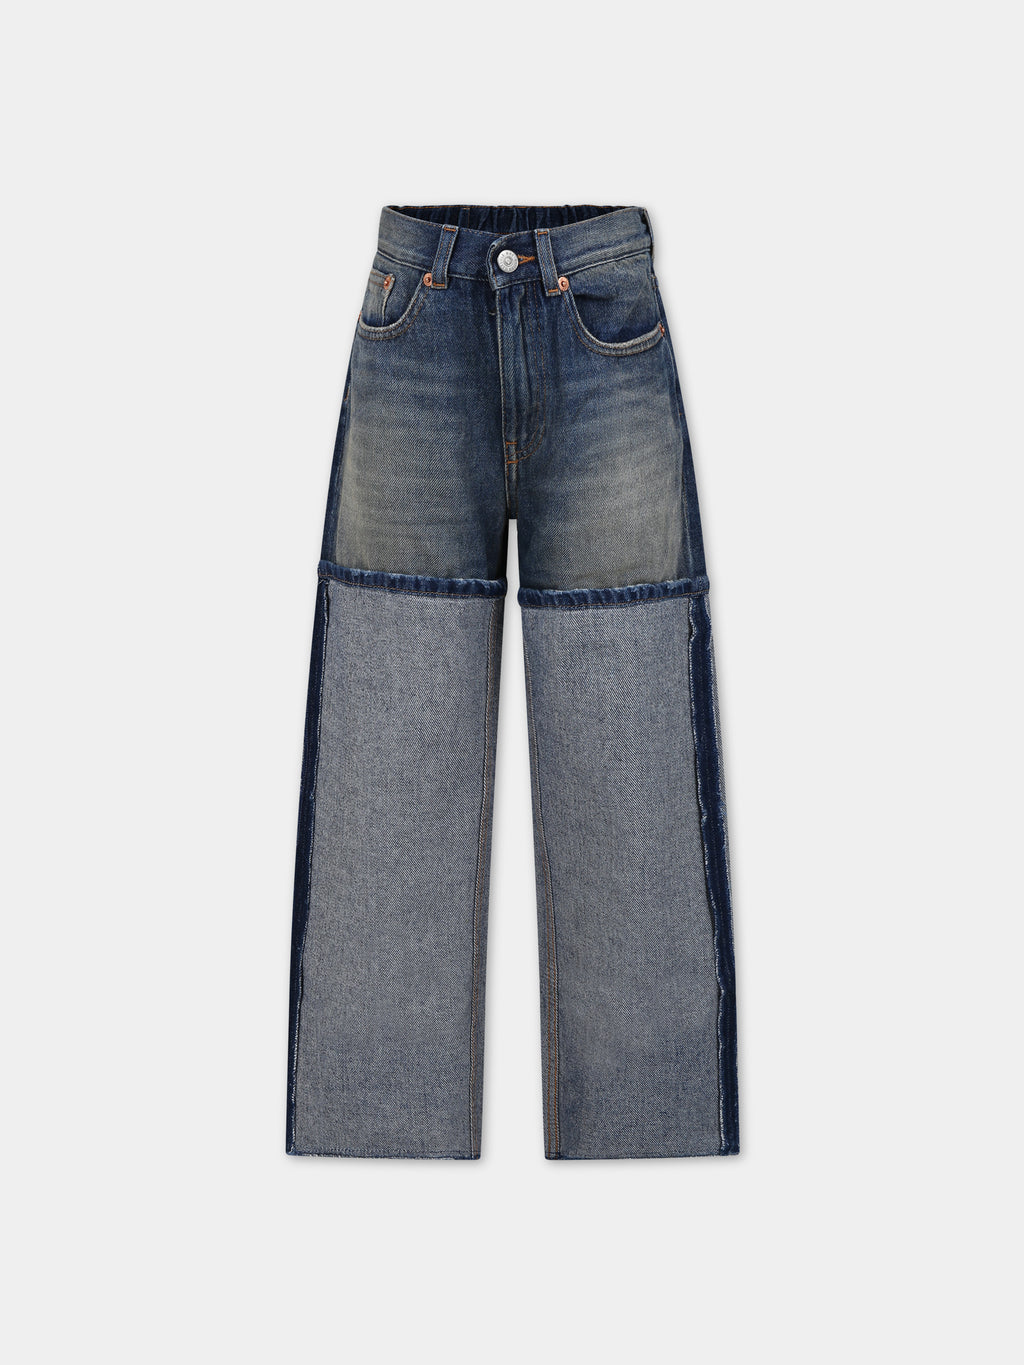 Jeans in denim per bambina con cuciture a contrasto